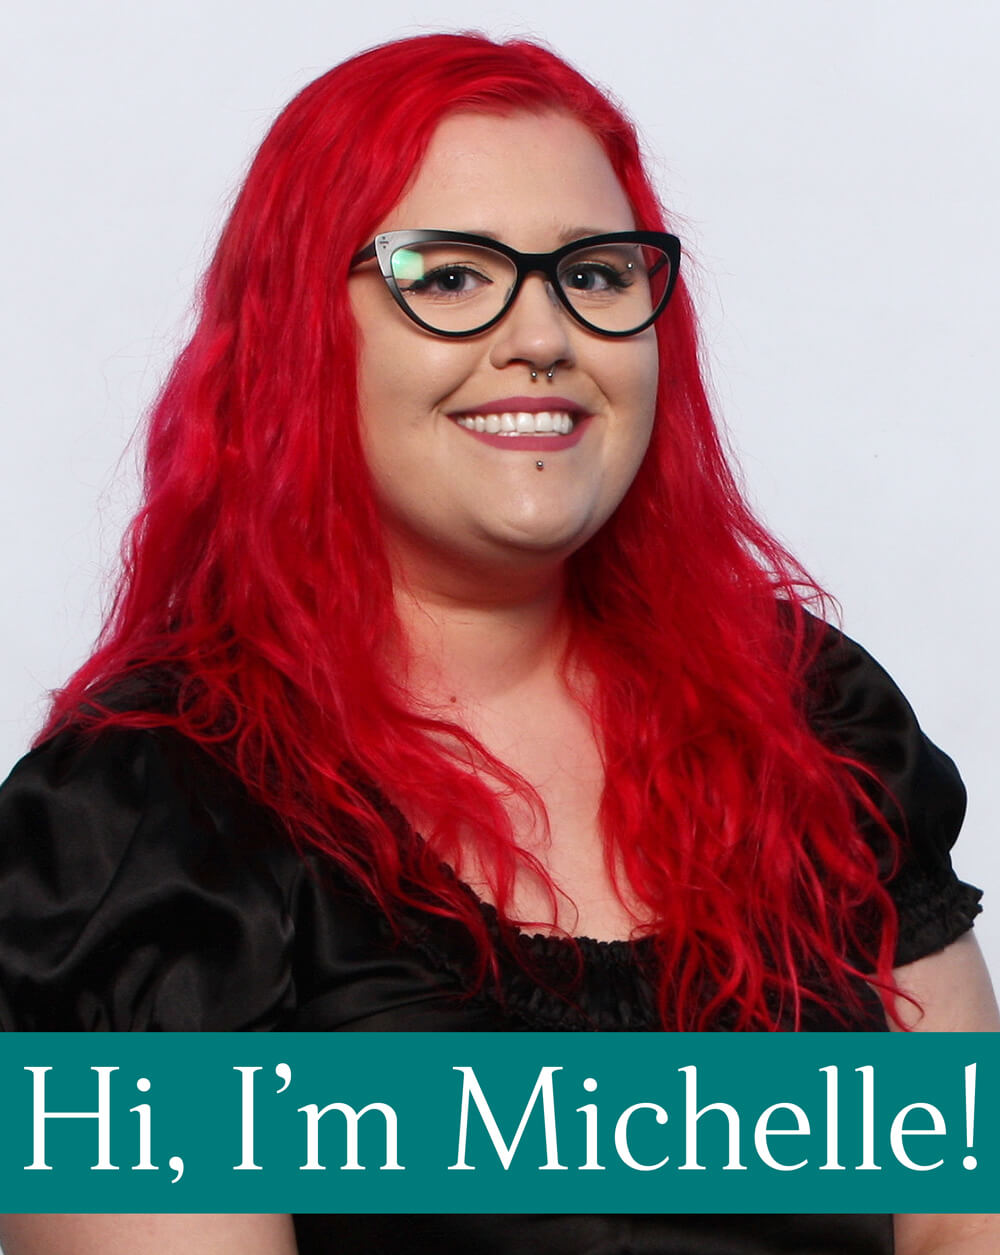 Hi there, I'm Michelle!